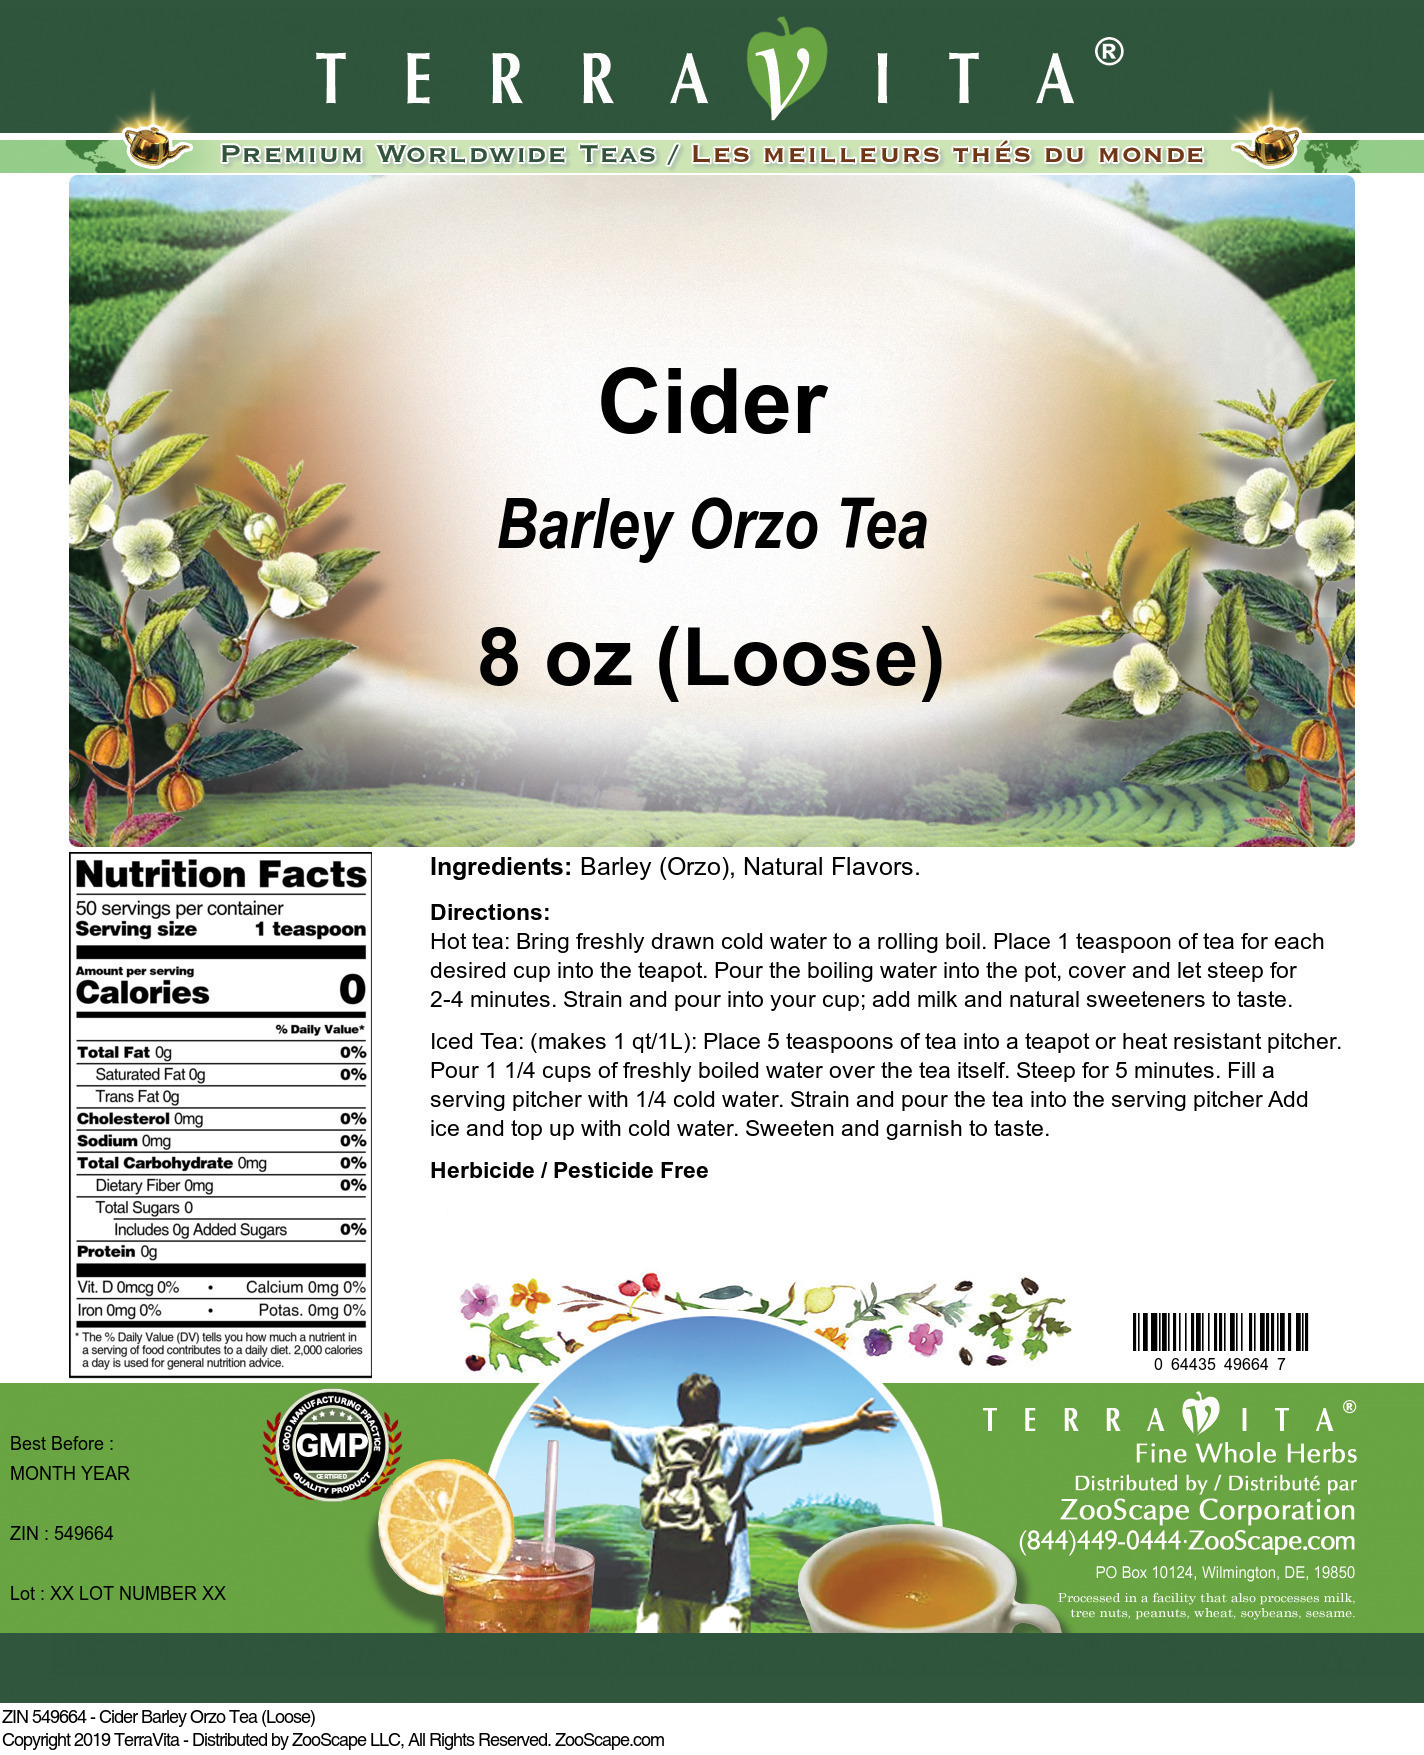 Cider Barley Orzo Tea (Loose) - Label